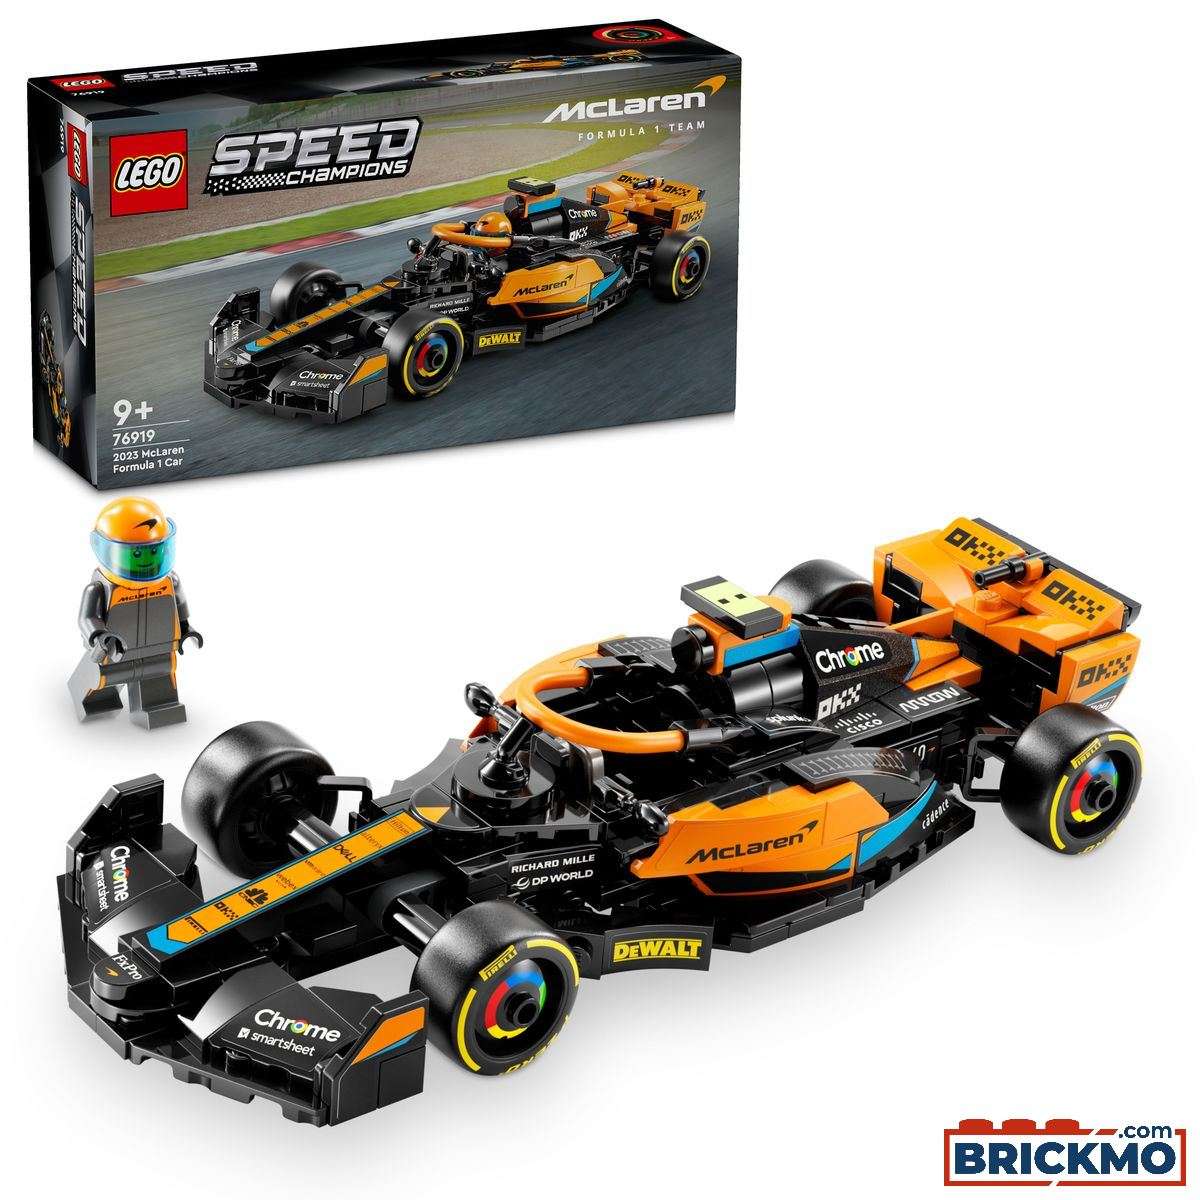 LEGO Speed Champions 76919 McLaren Formula 1 Race Car 76919